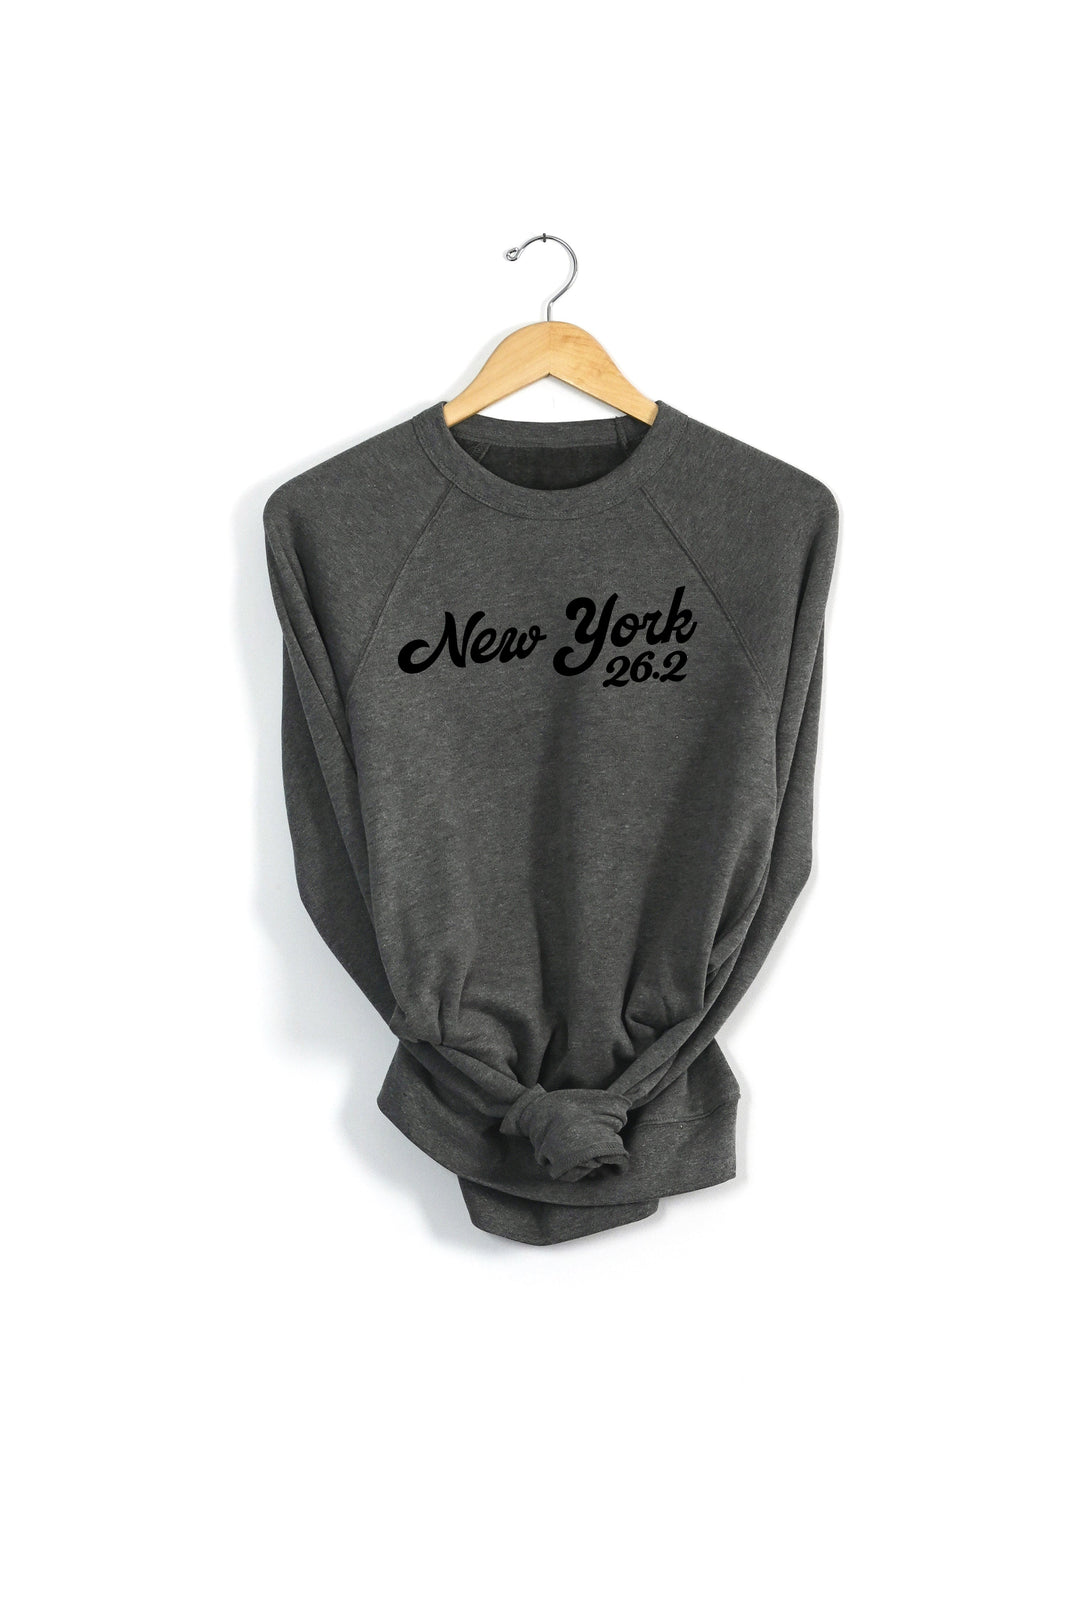 Sarah Marie Design Studio Sweatshirt XSmall / Grey Triblend / Black Custom Race Sweatshirt